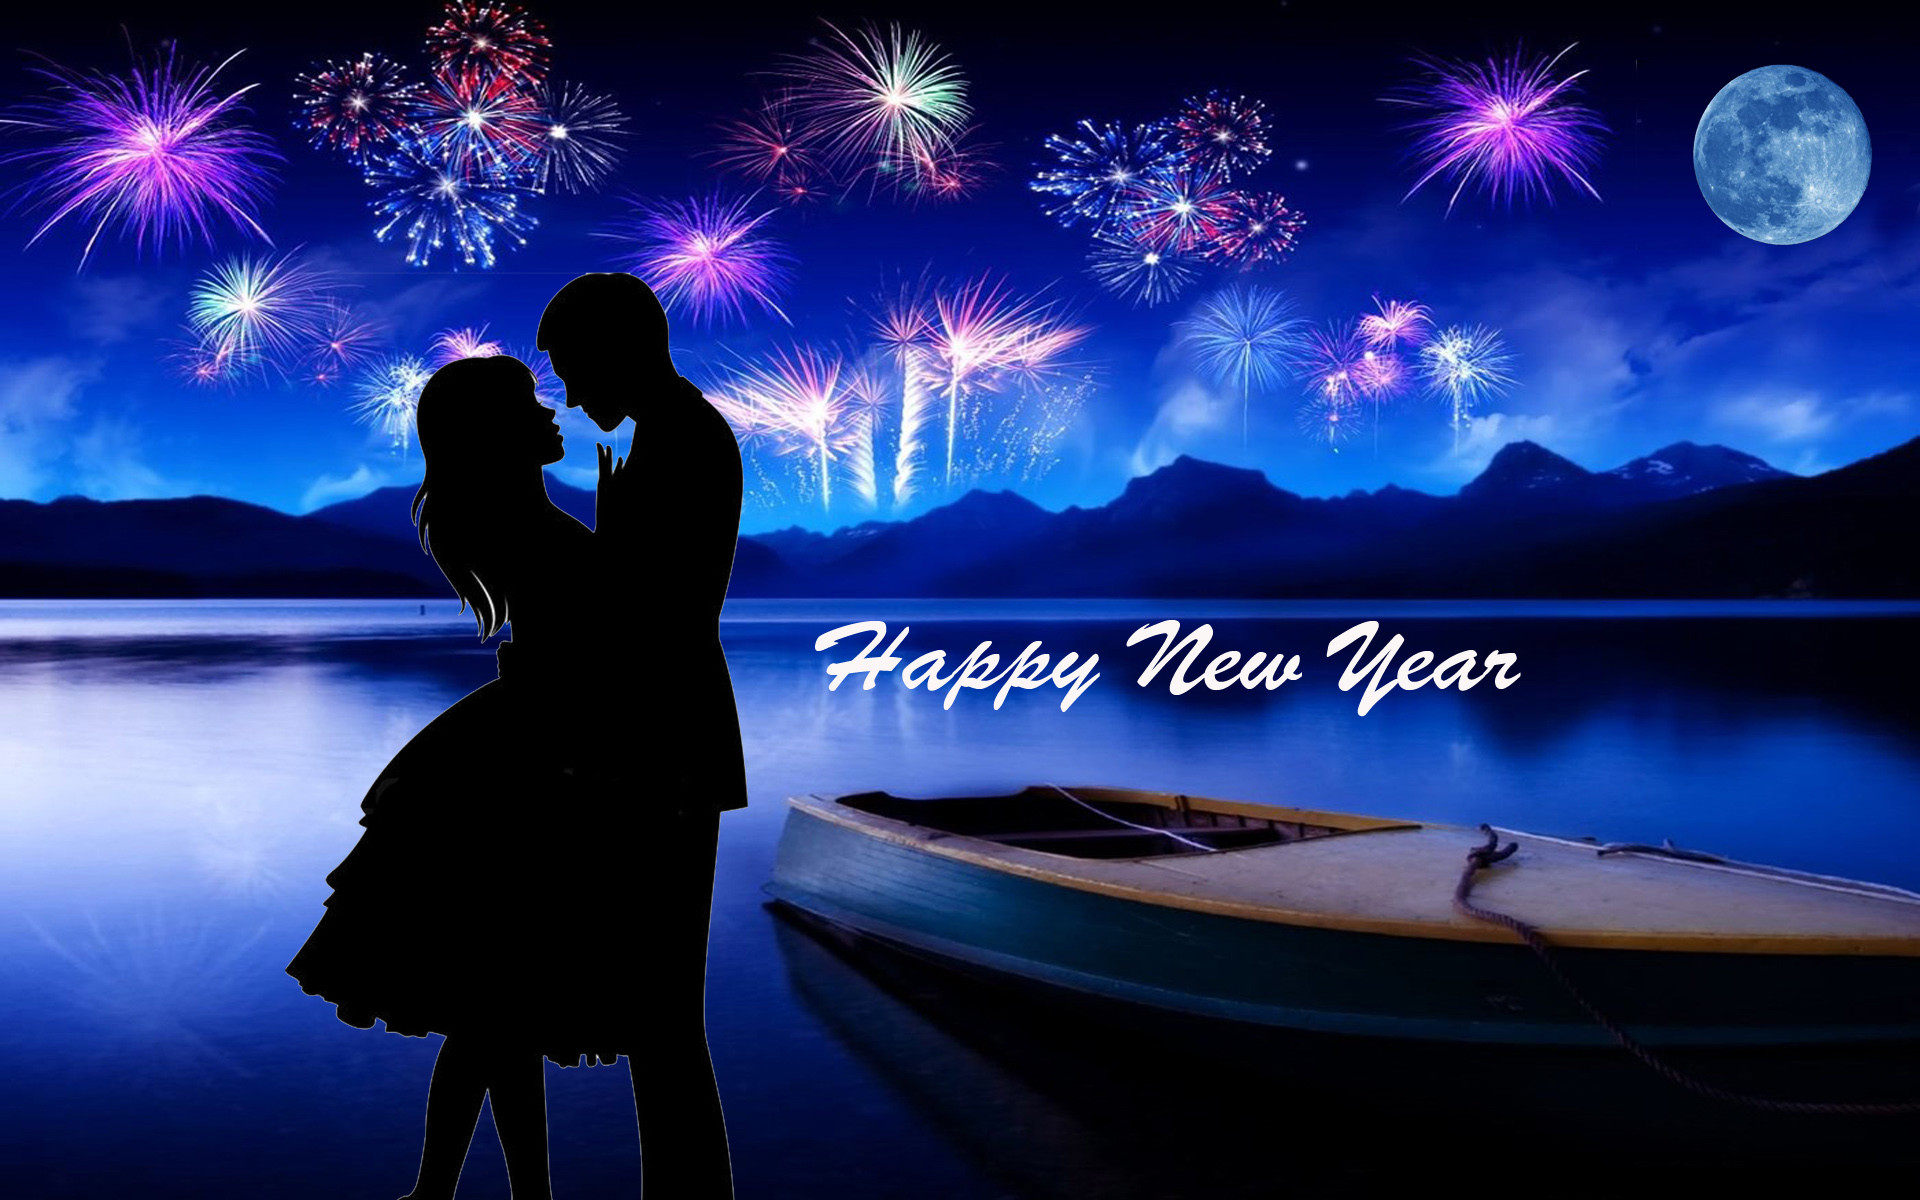 Happy New Year Love Wallpaper Image